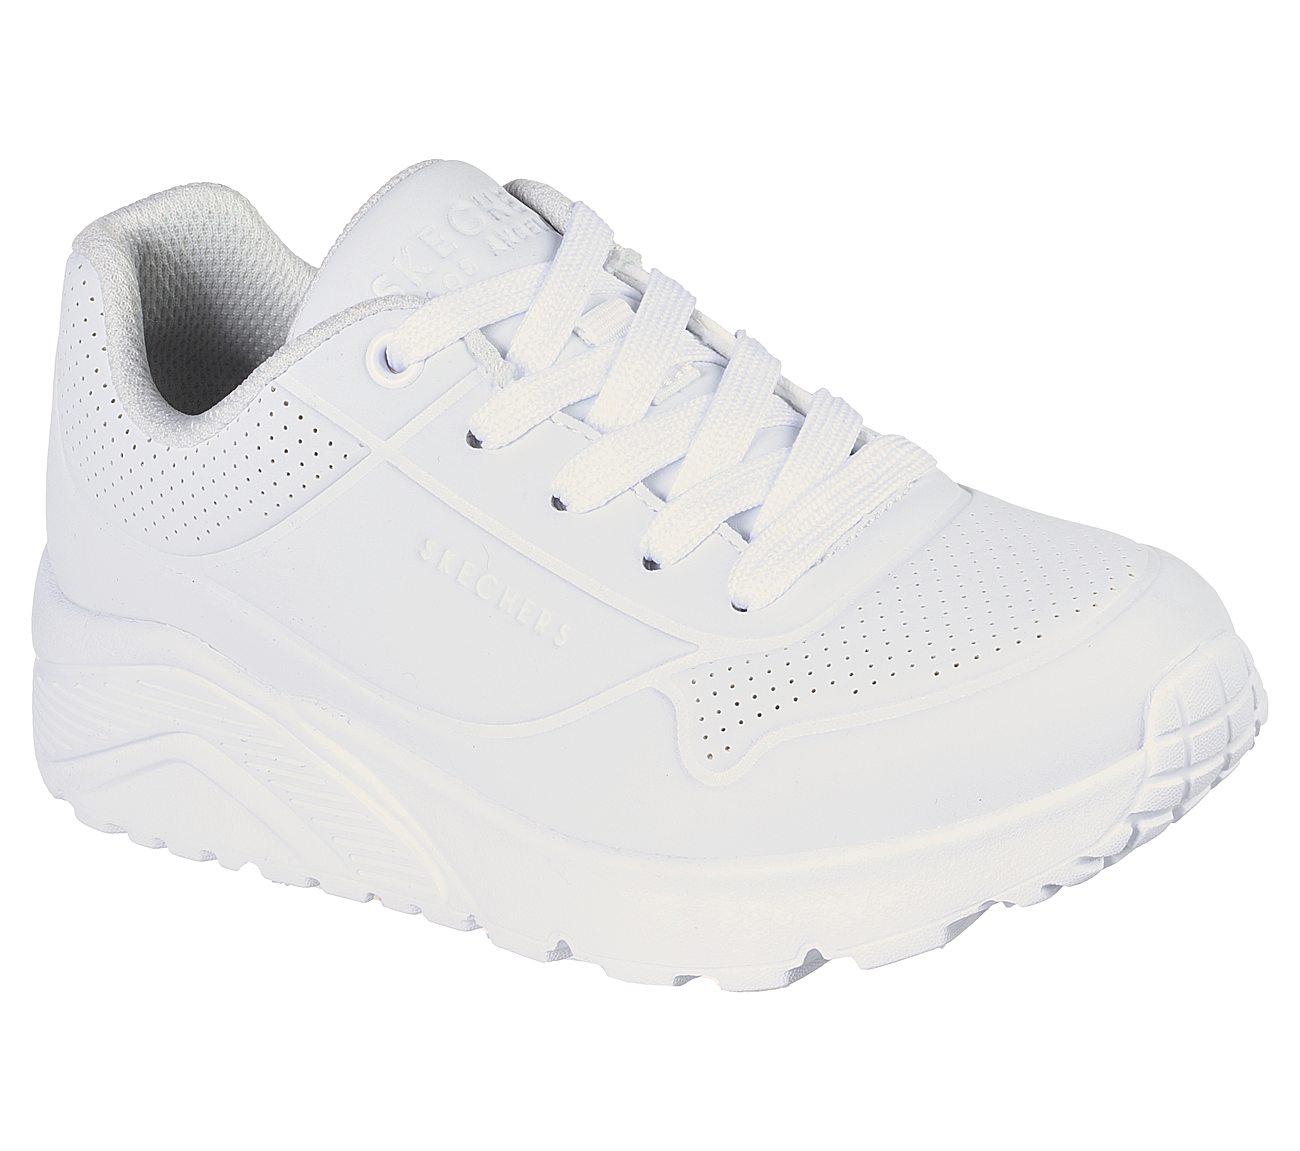 UNO LITE - DELODOX, WHITE Footwear Lateral View